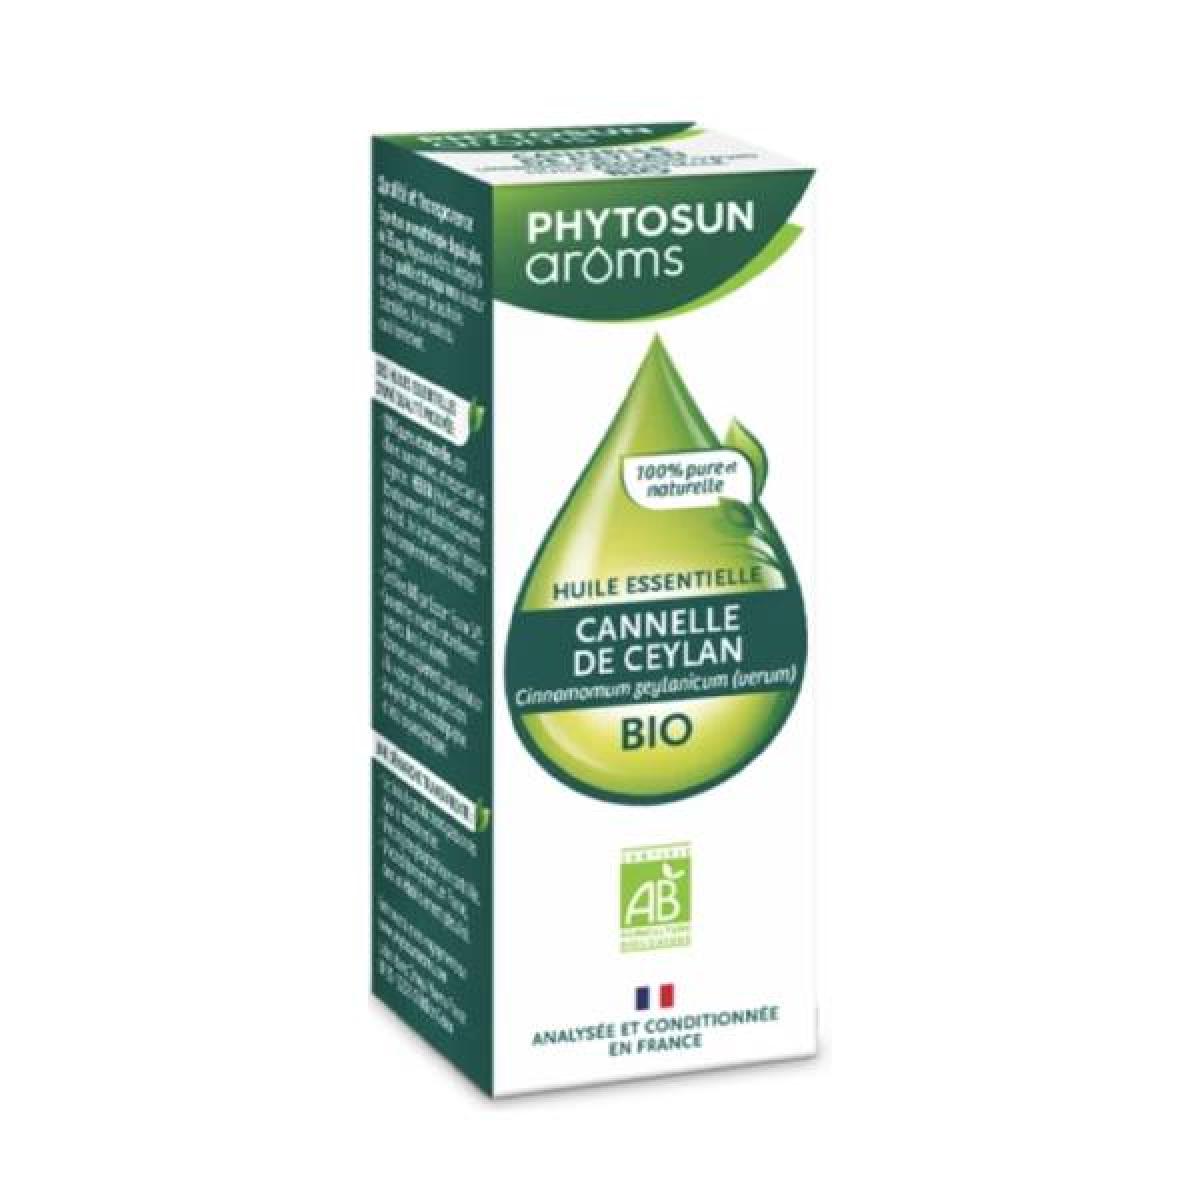 Huile Essentielle Cannelle de Ceylan BIO 5 ml Phytosun Arôms